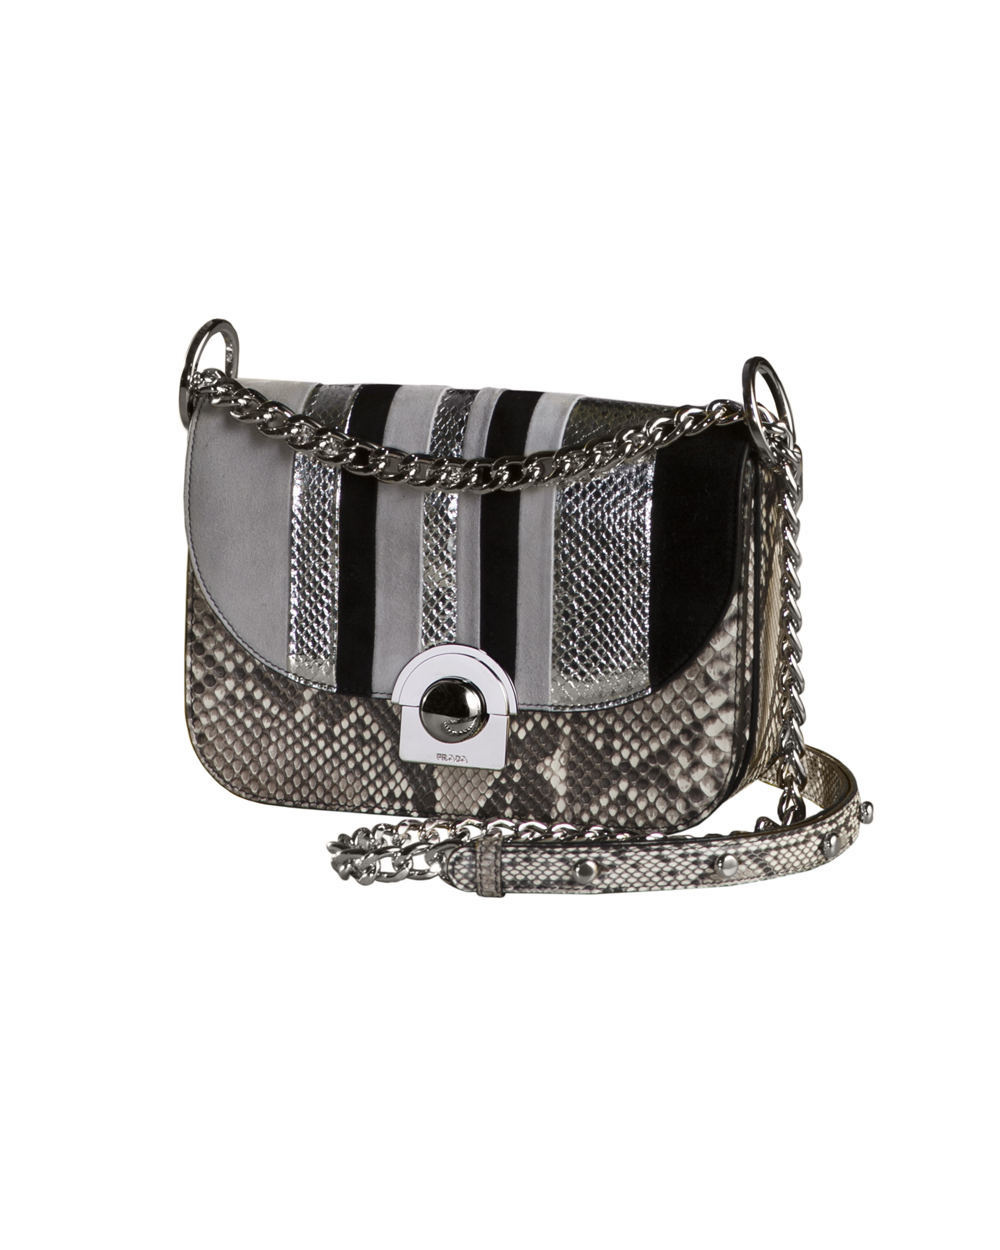 Bag, $6,300, by Prada.